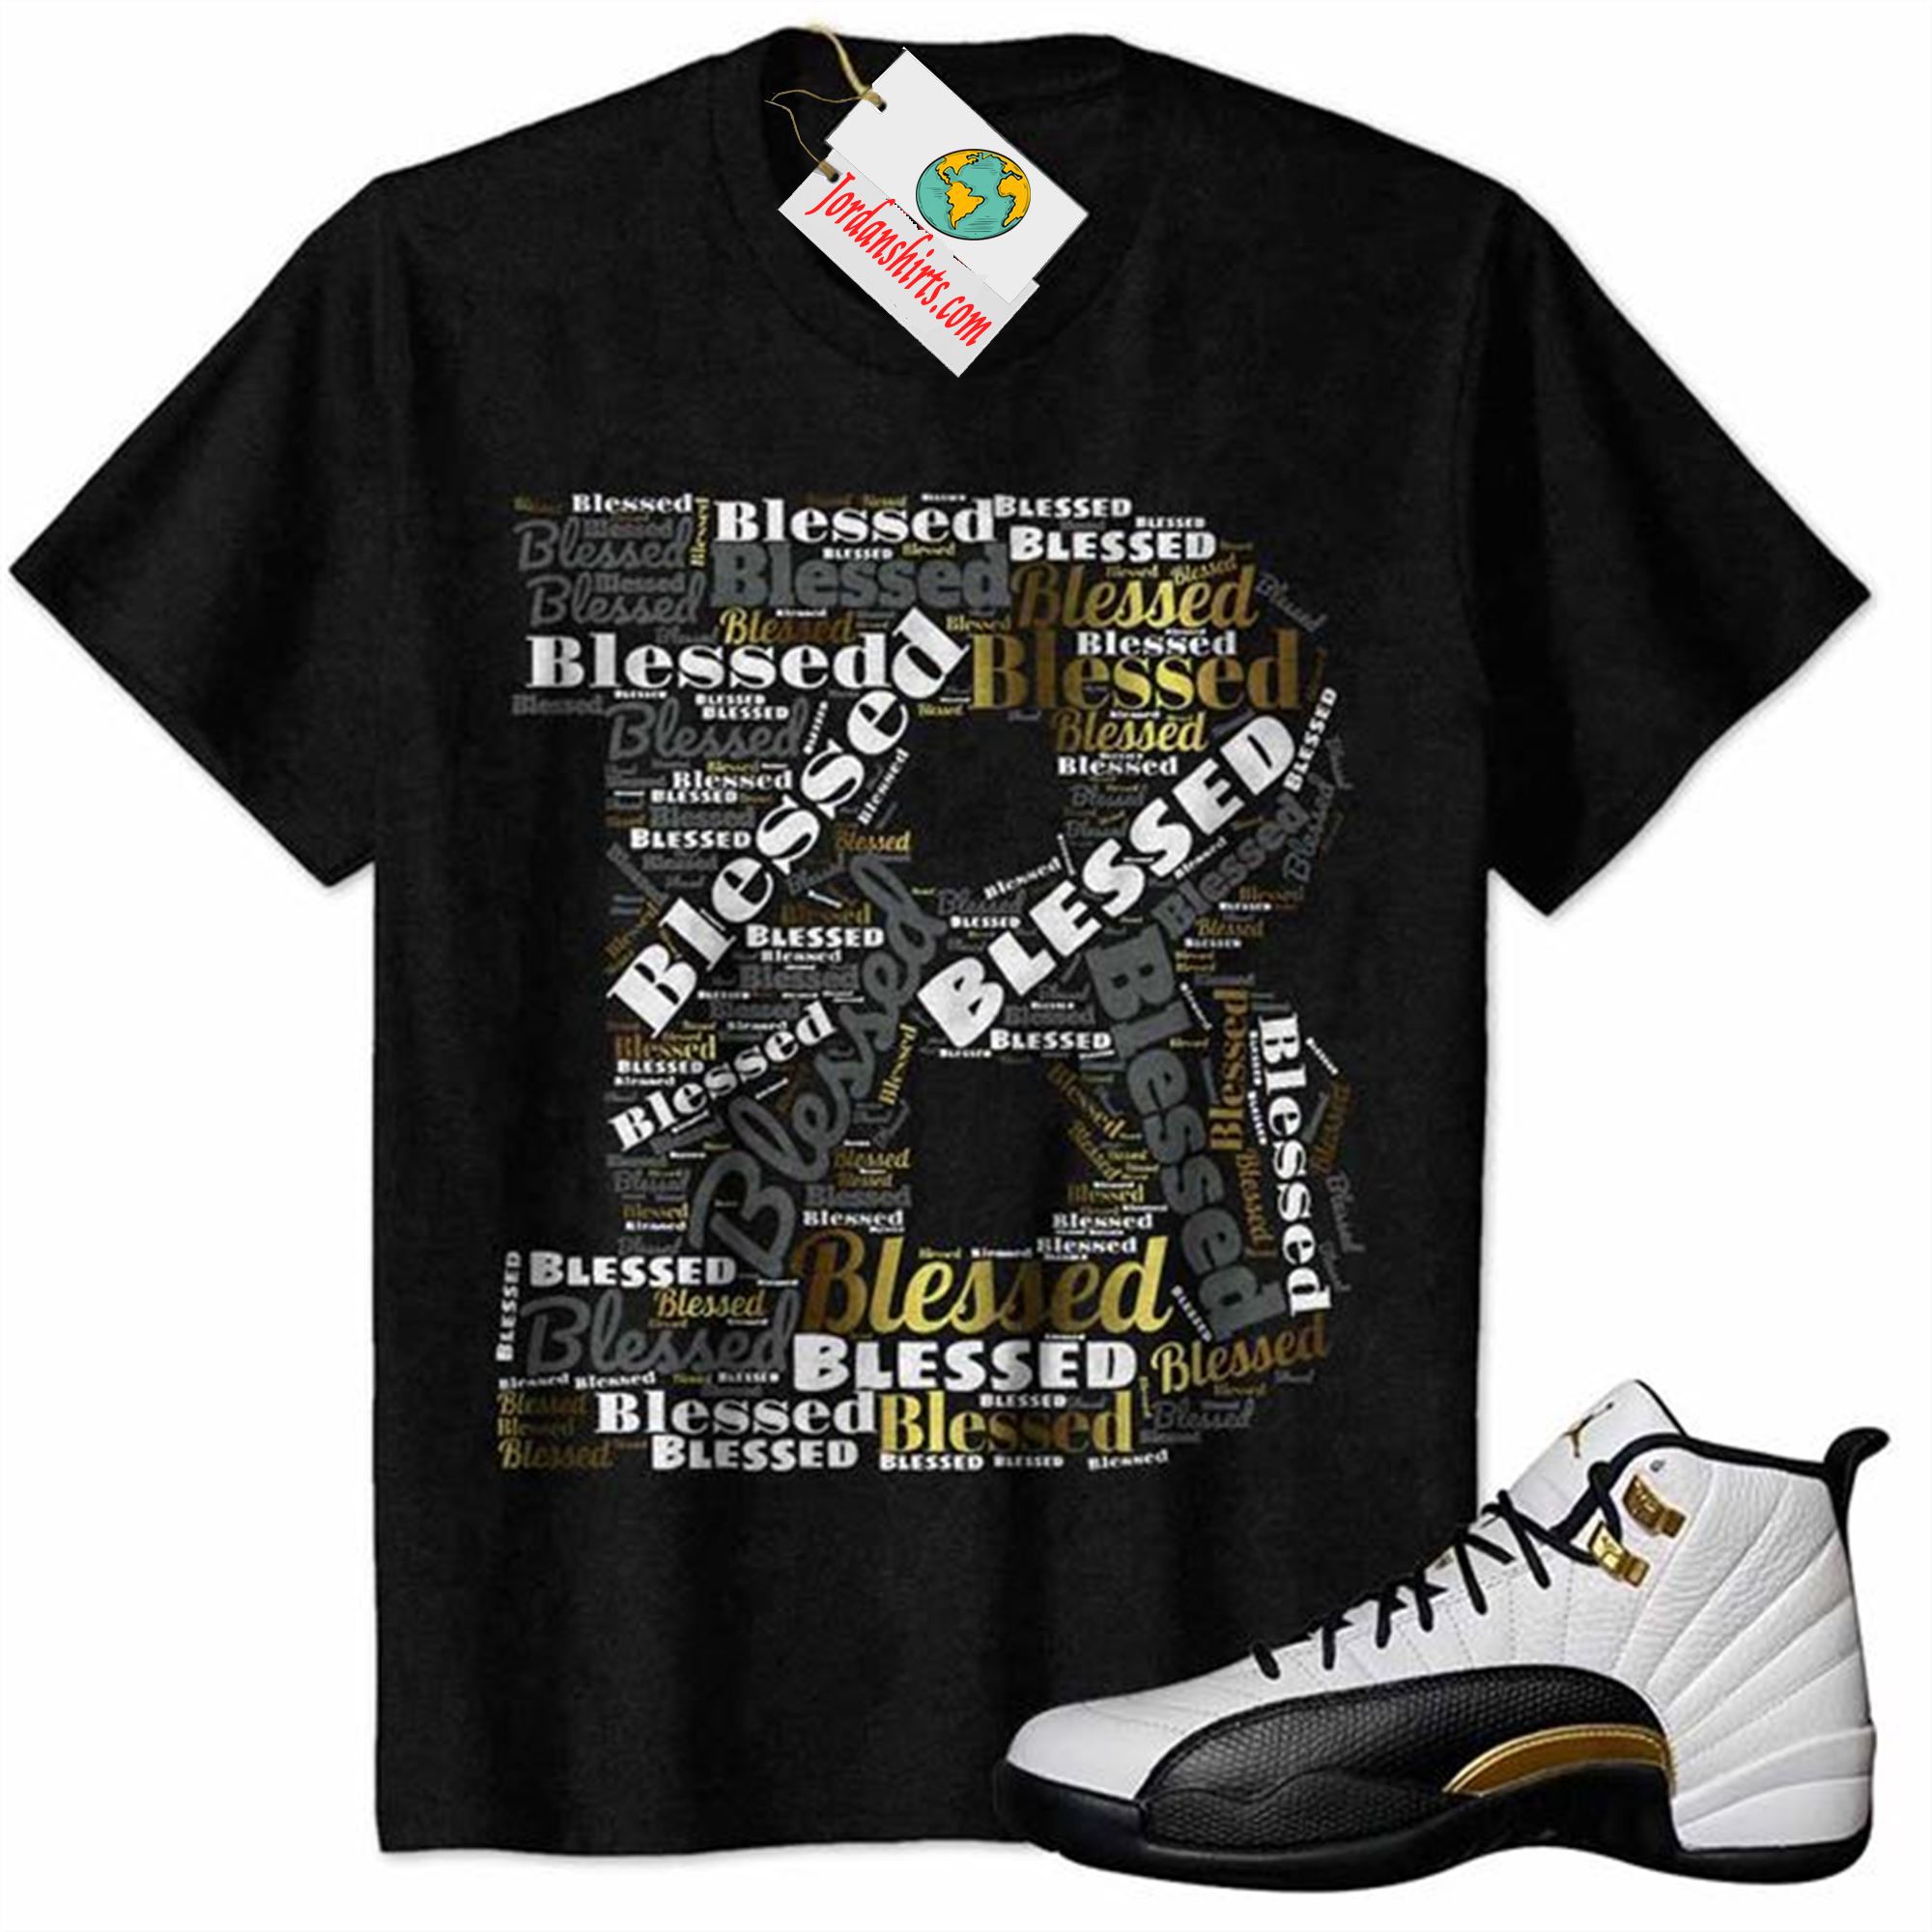 Jordan 12 Shirt, B Blessed Blessing Black Air Jordan 12 Royalty 12s Size Up To 5xl